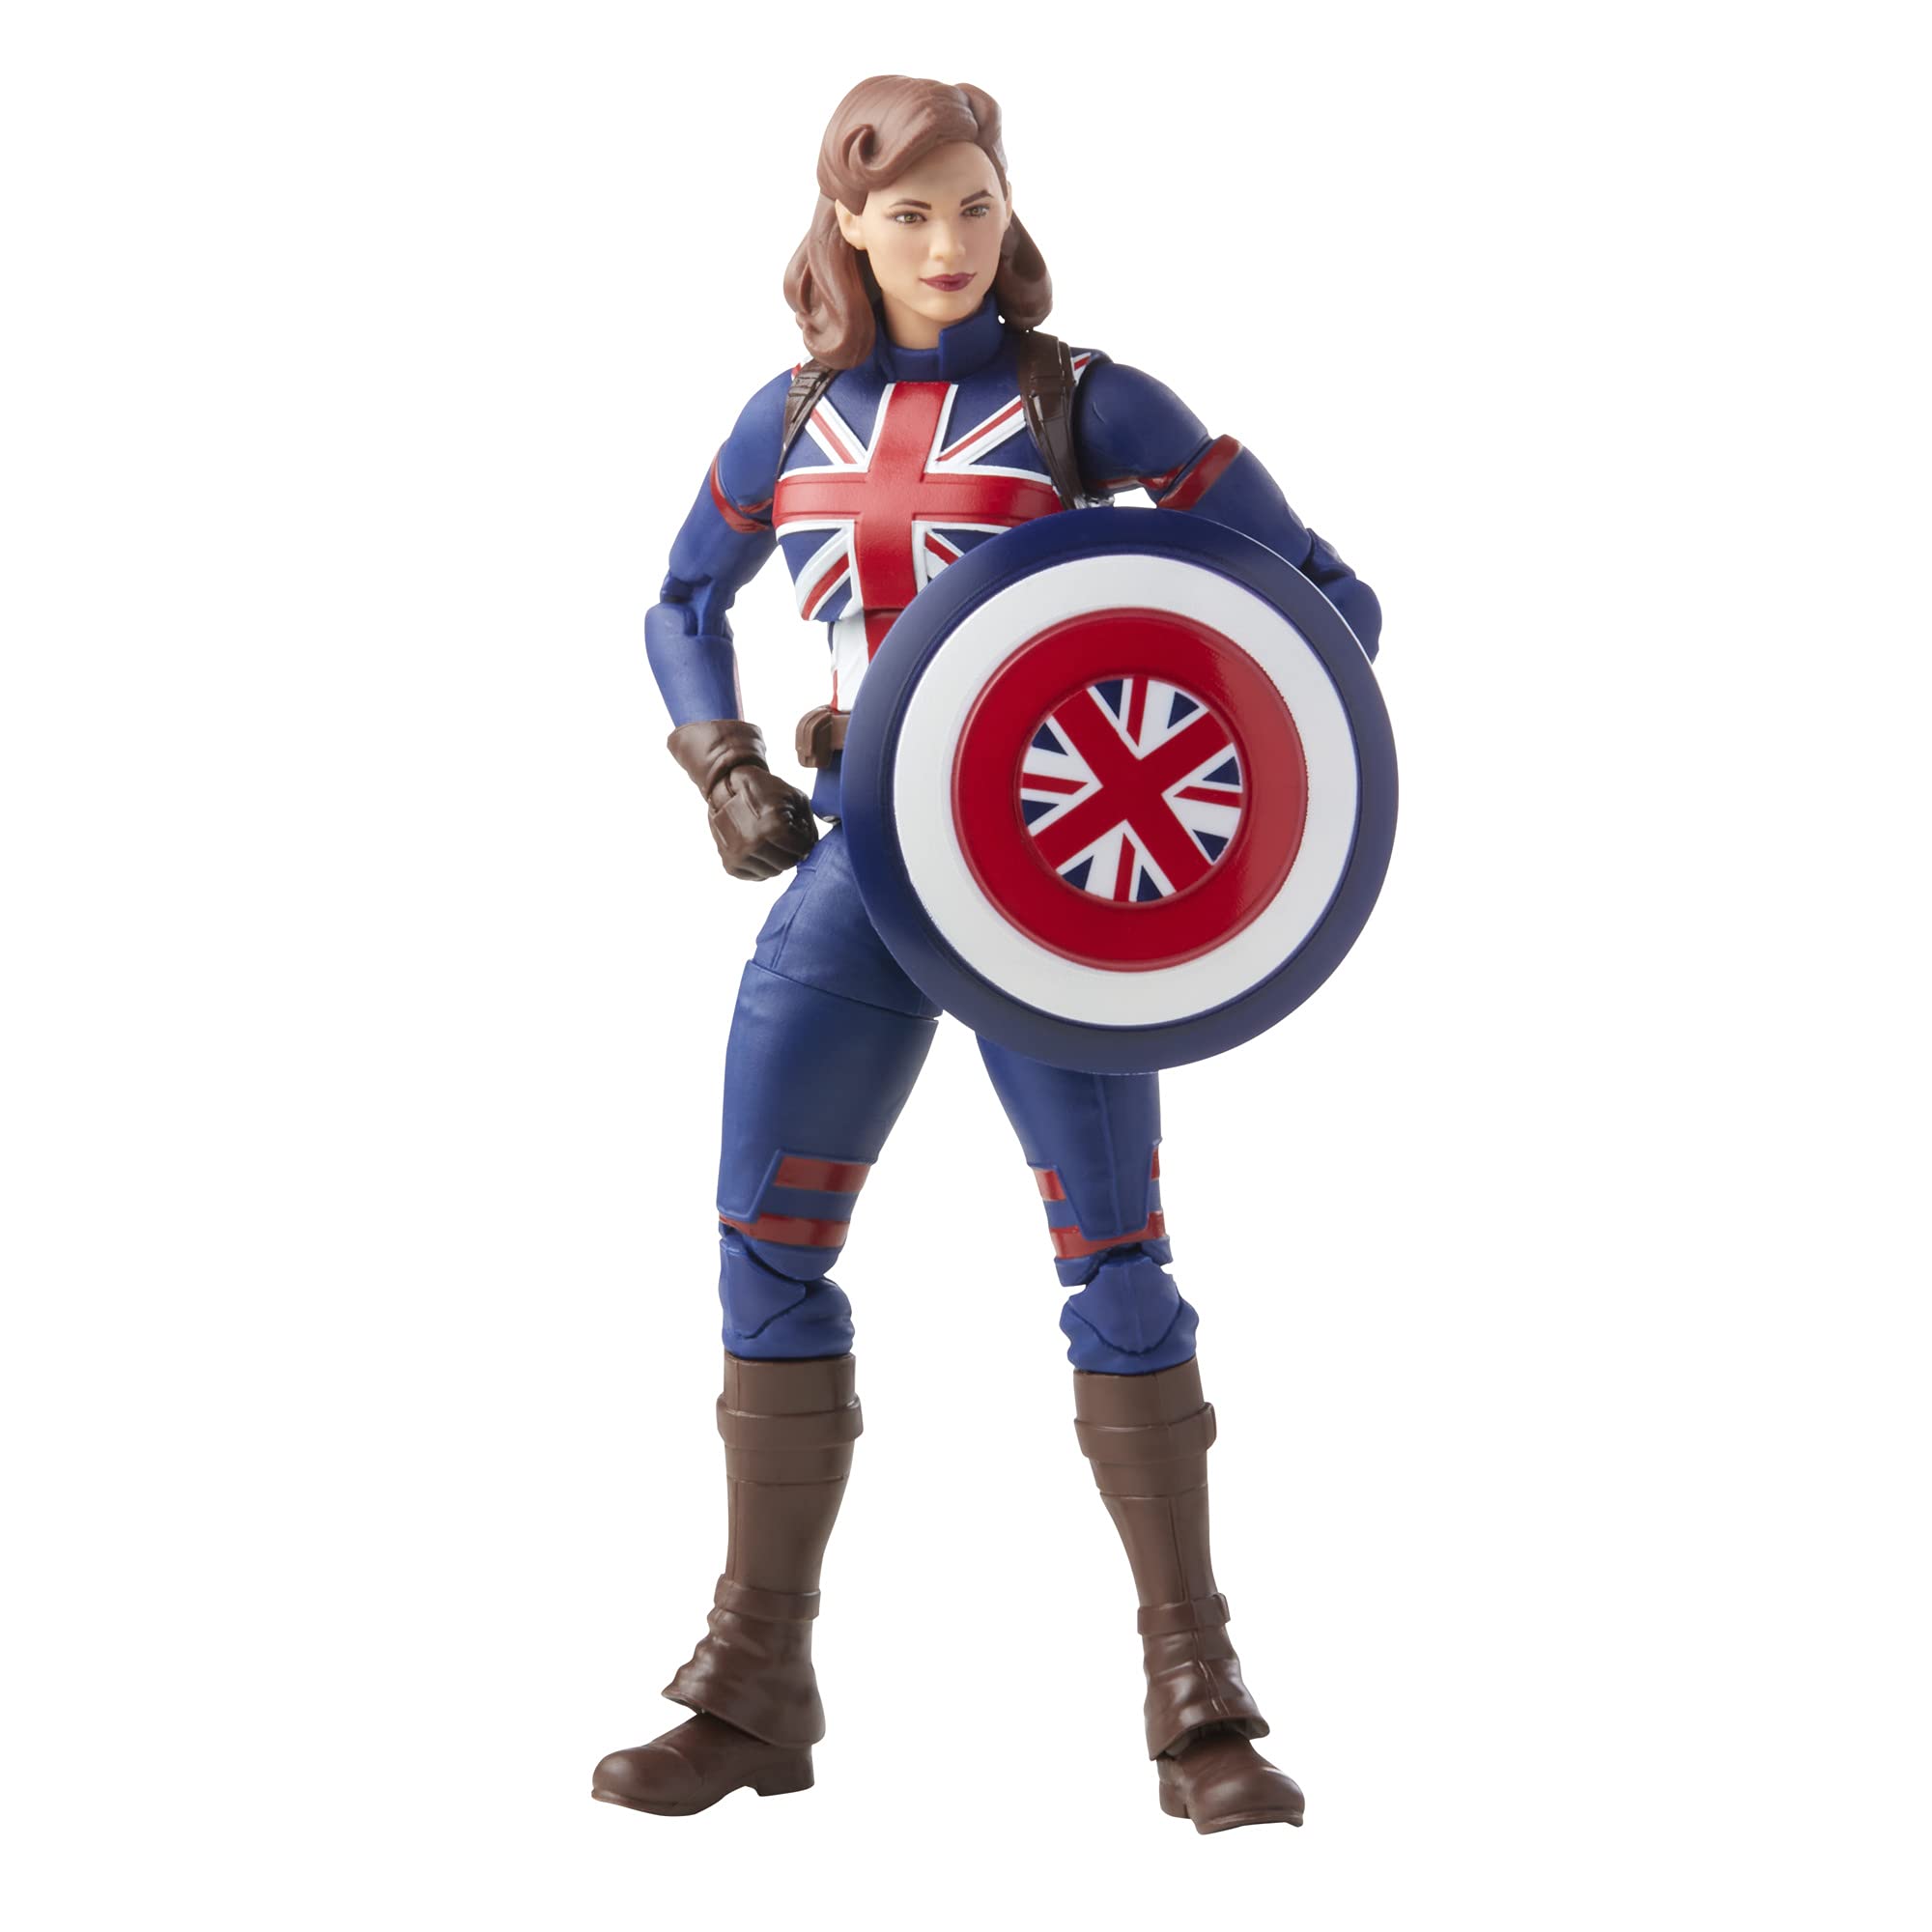 Avengers Marvel Legends Series 6-inch Scale Action Figure Toy Marvel’s Captain Carter, Premium Design, 1 Figure, 1 Accessory, and 2 Build-a-Figure Parts